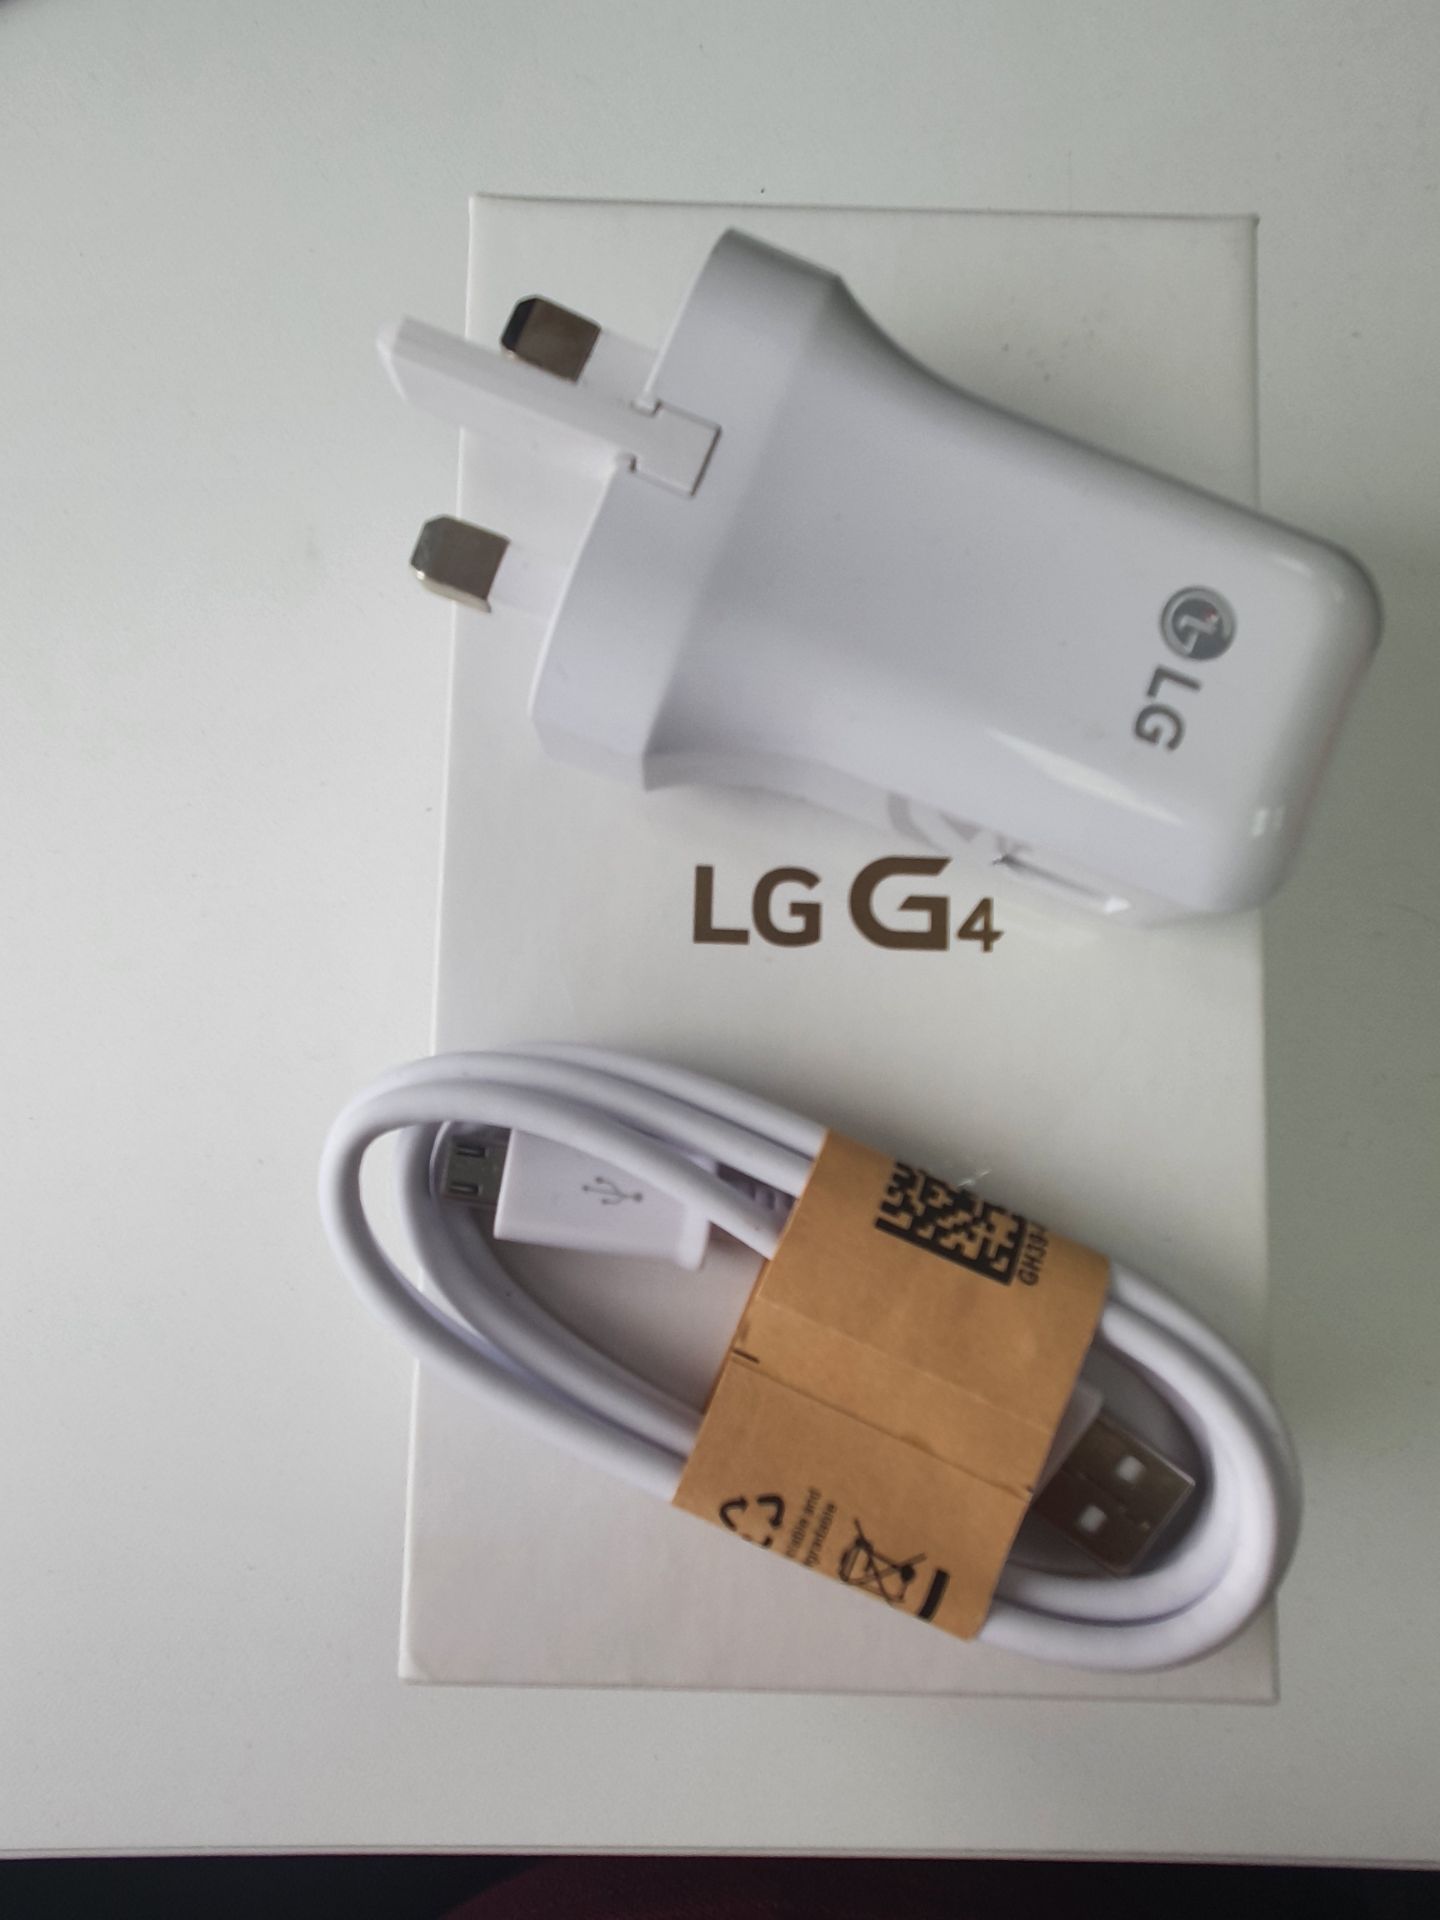 Ex-Display LG G4 Smartphone - Image 3 of 3